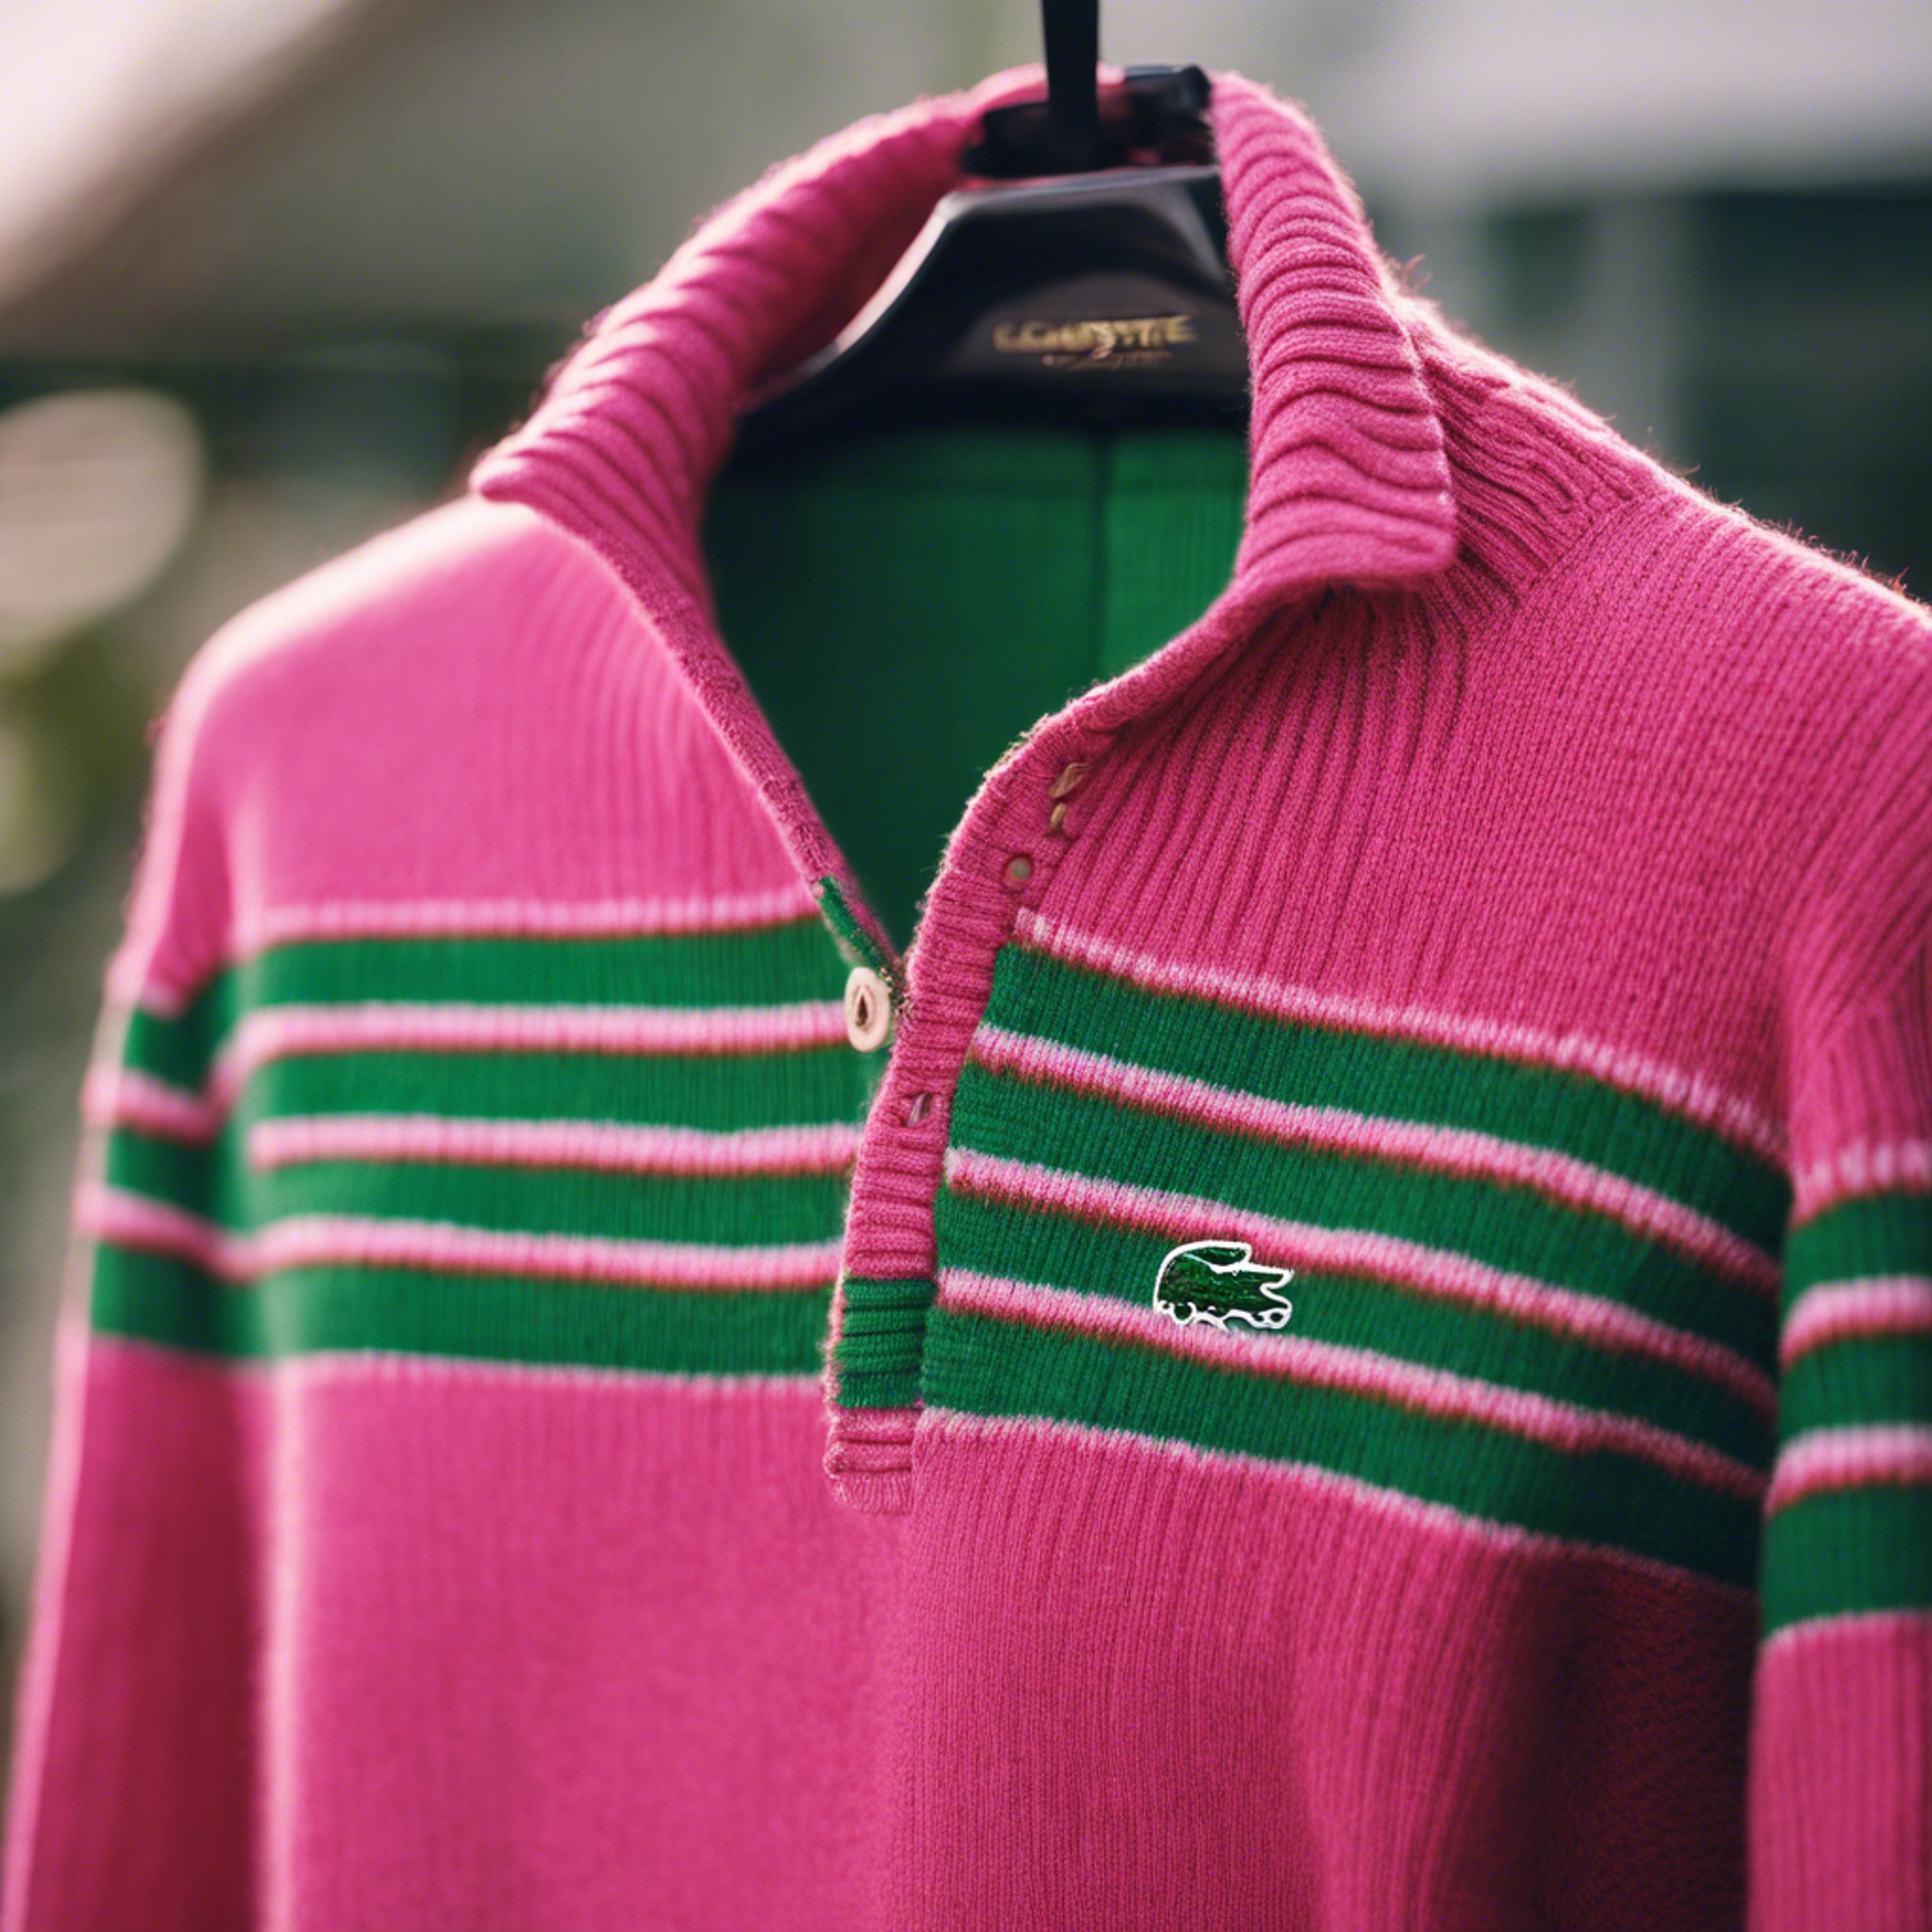 A preppy Lacoste sweater in bright pink and green stripes. ផ្ទាំង​រូបភាព[46dc671cf42d4e658ddb]